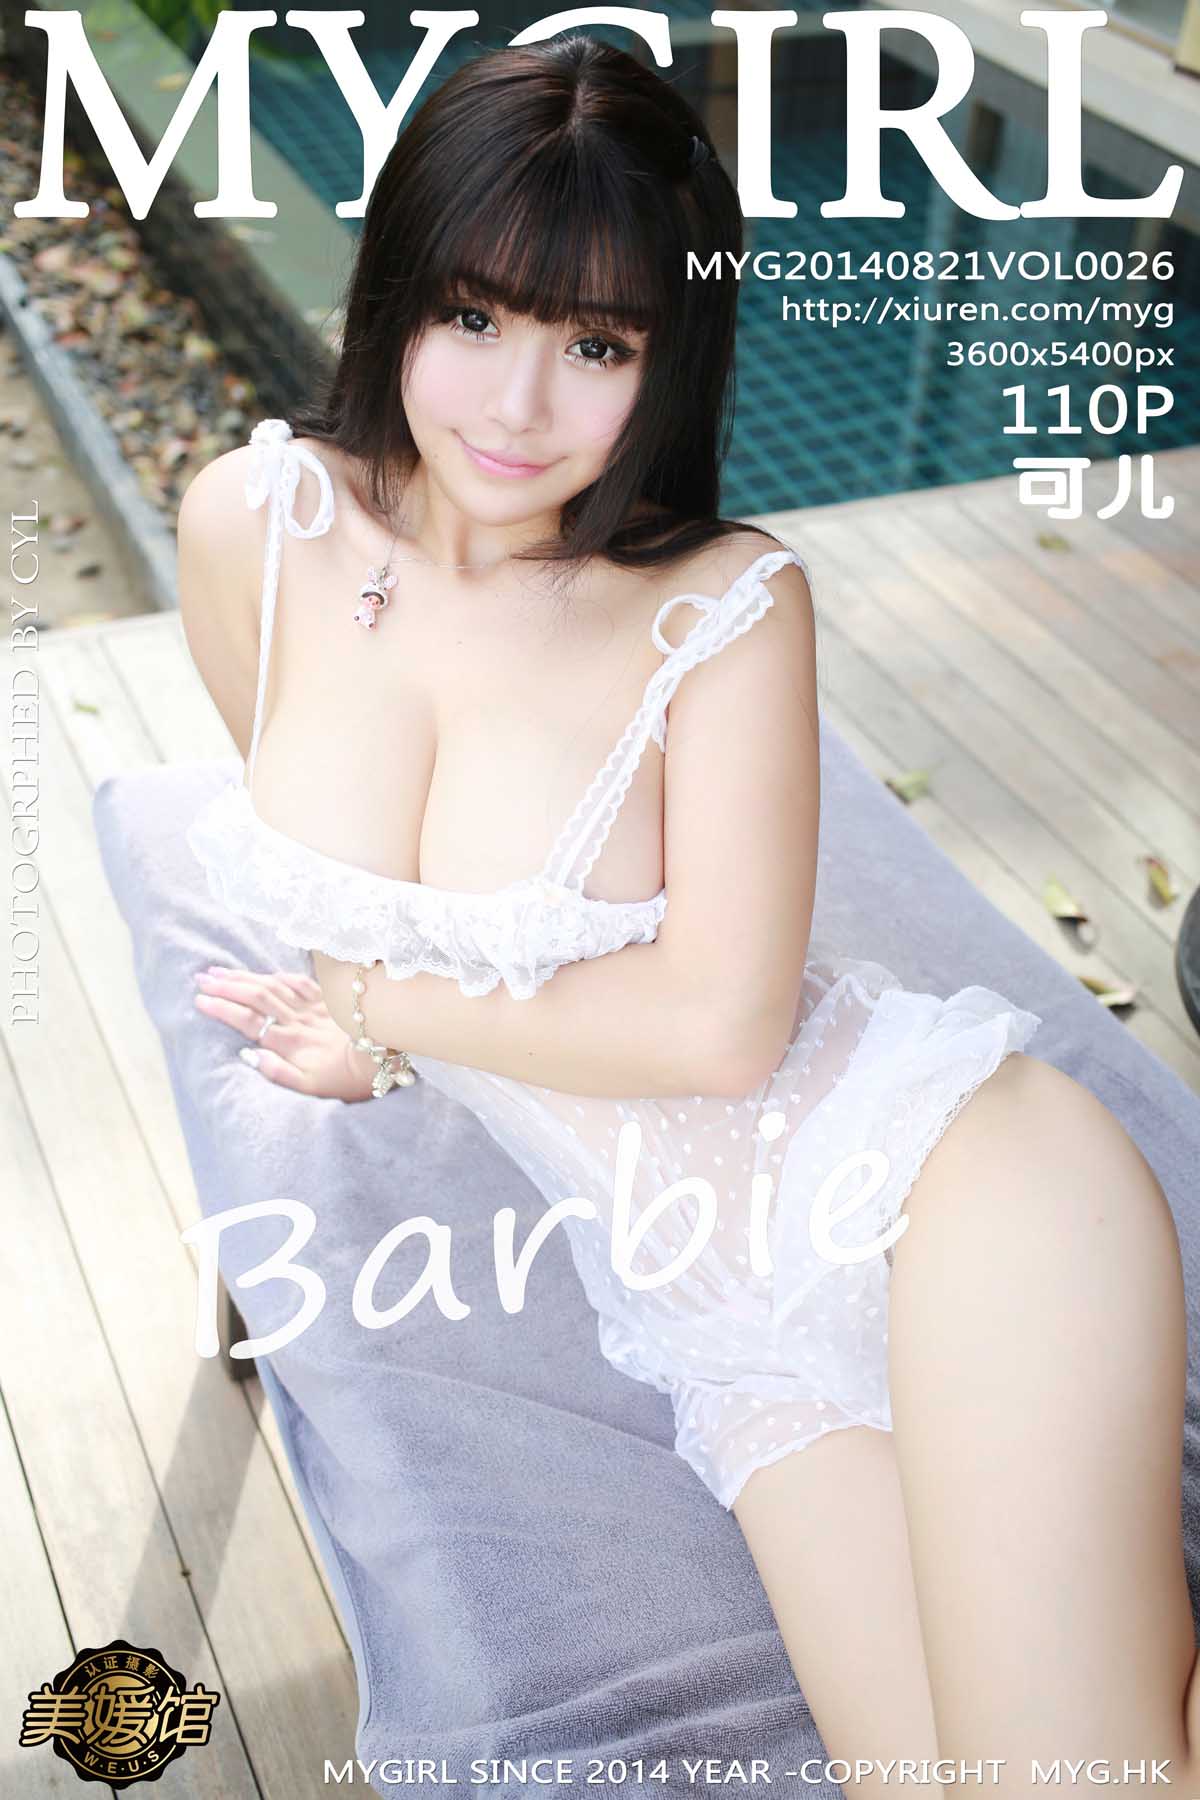 [MyGirl]美媛馆新特刊 2014-08-21 Vol.026 Barbie可儿